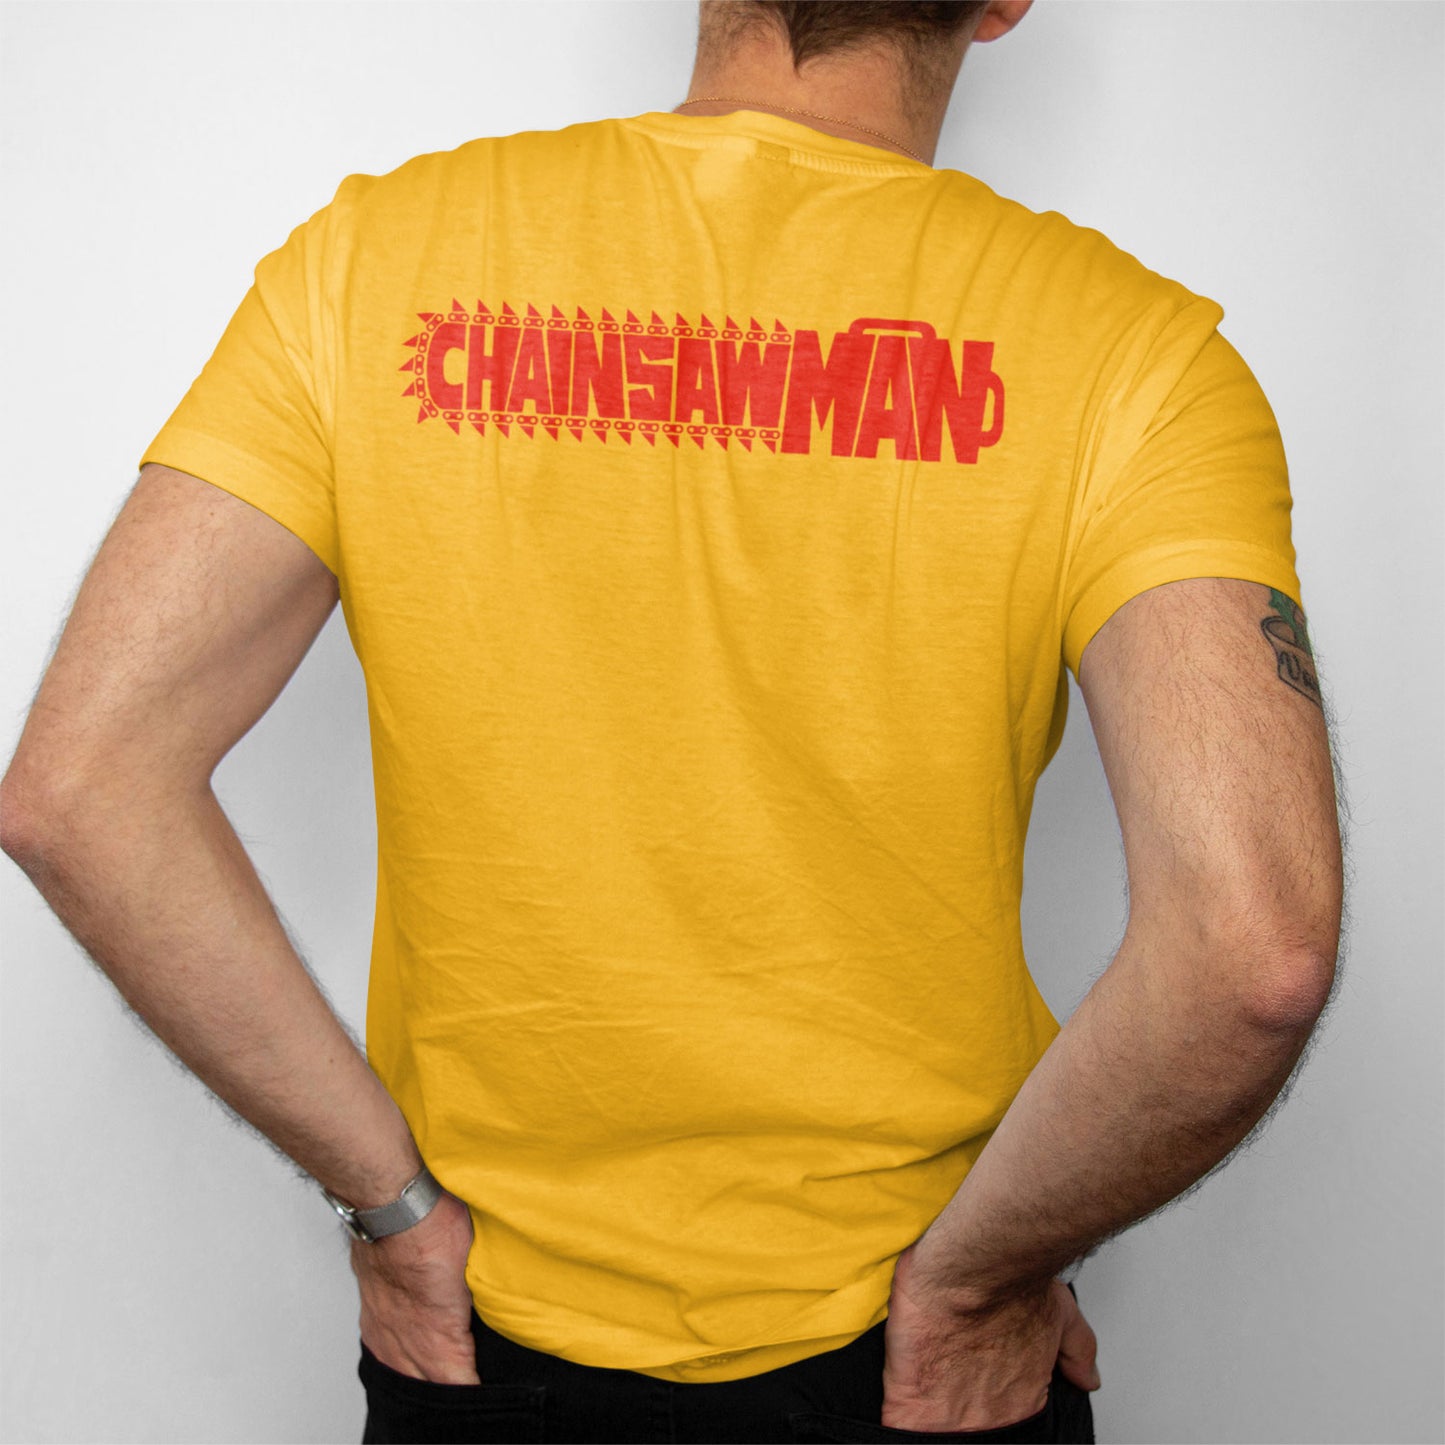 Chainsaw man Regular Yellow Tshirt